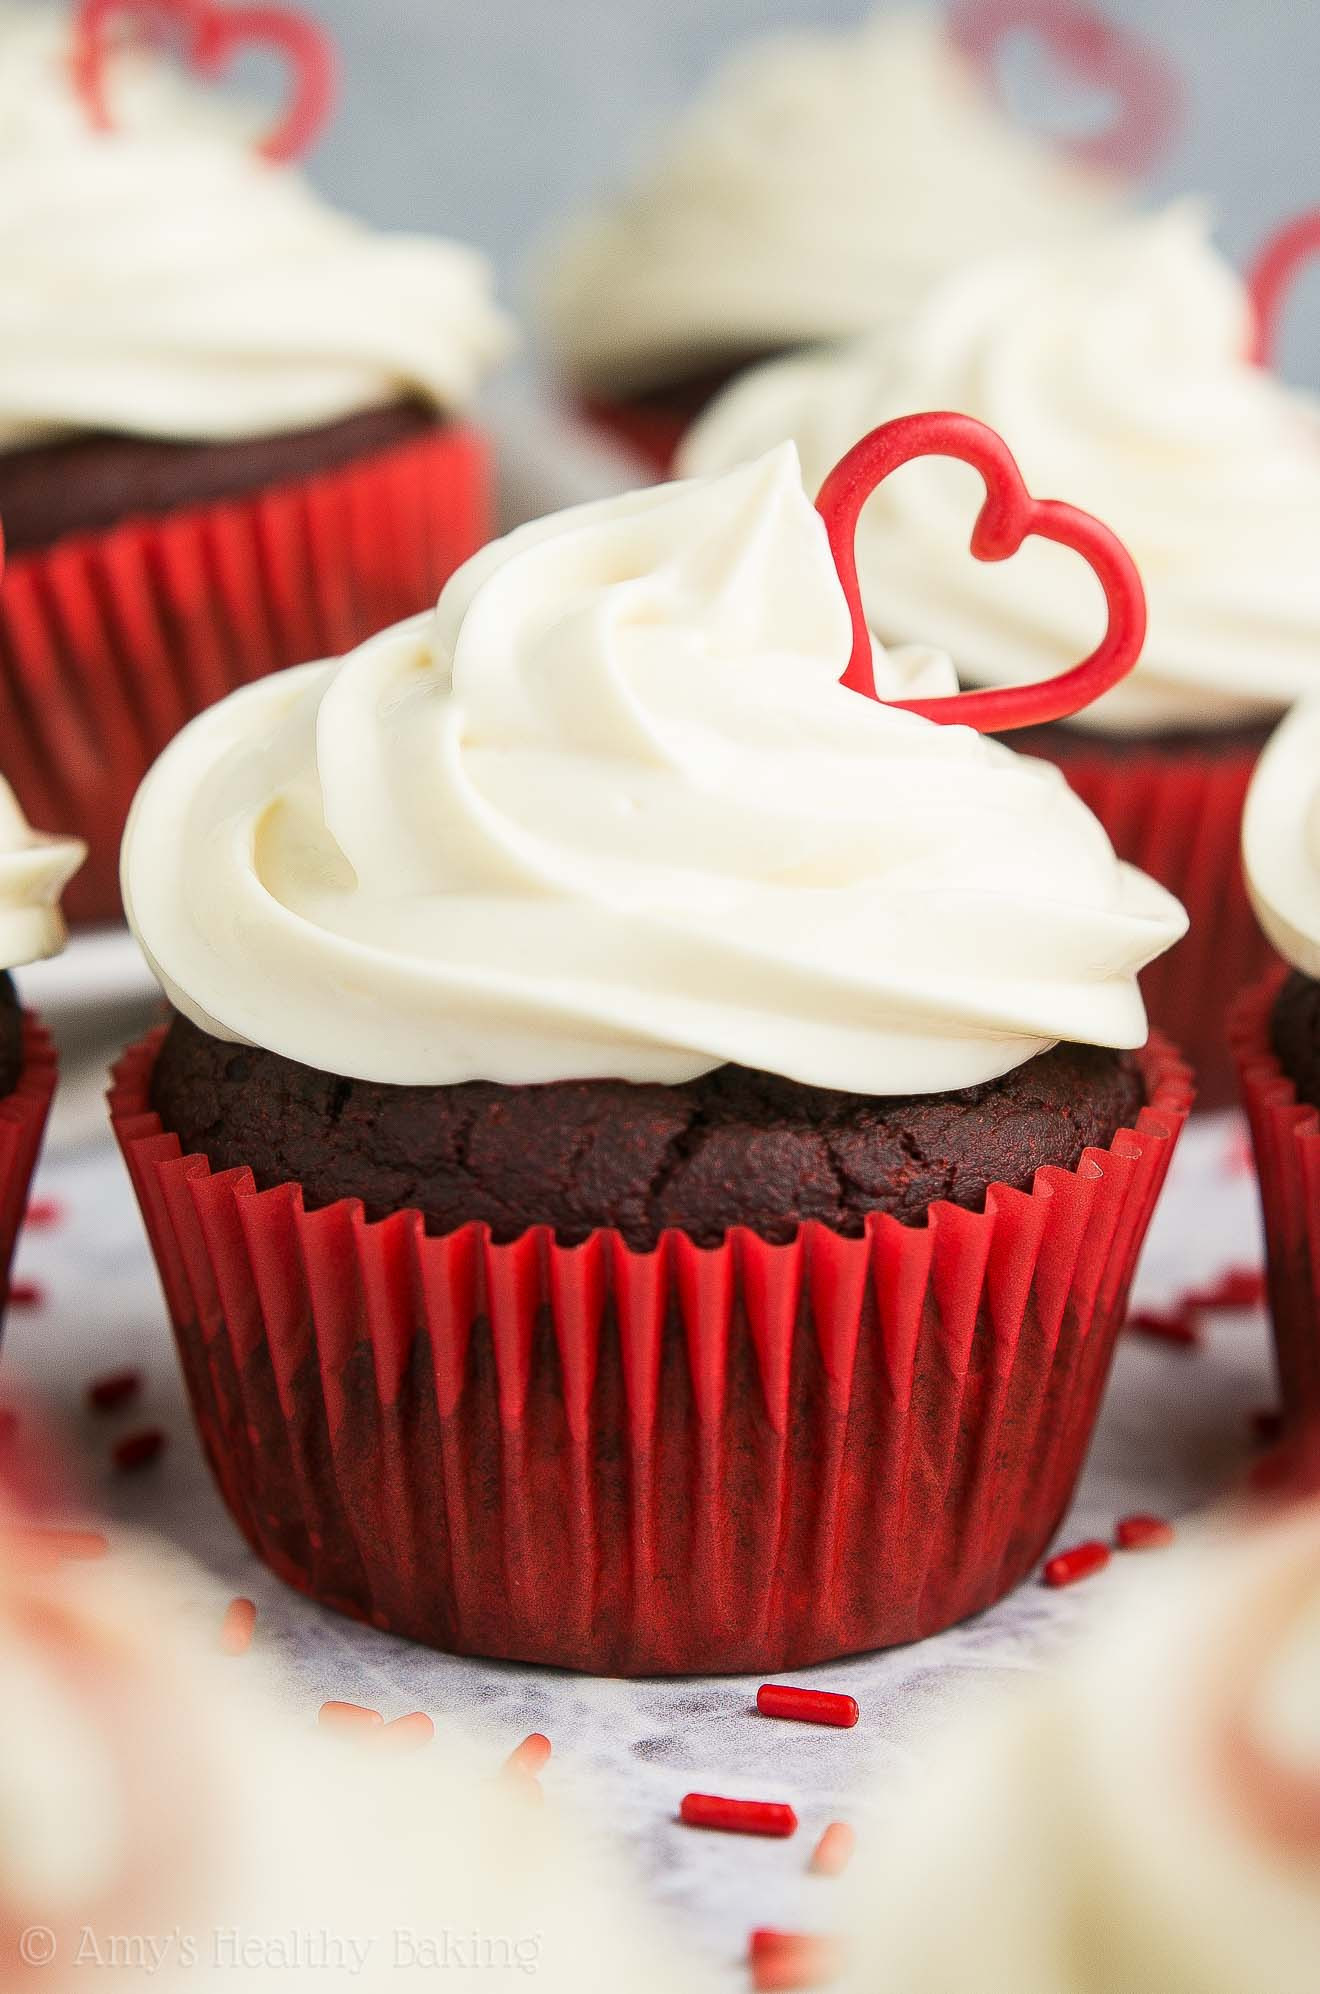 Healthy Red Velvet Cake
 The Ultimate Healthy Red Velvet Cupcakes